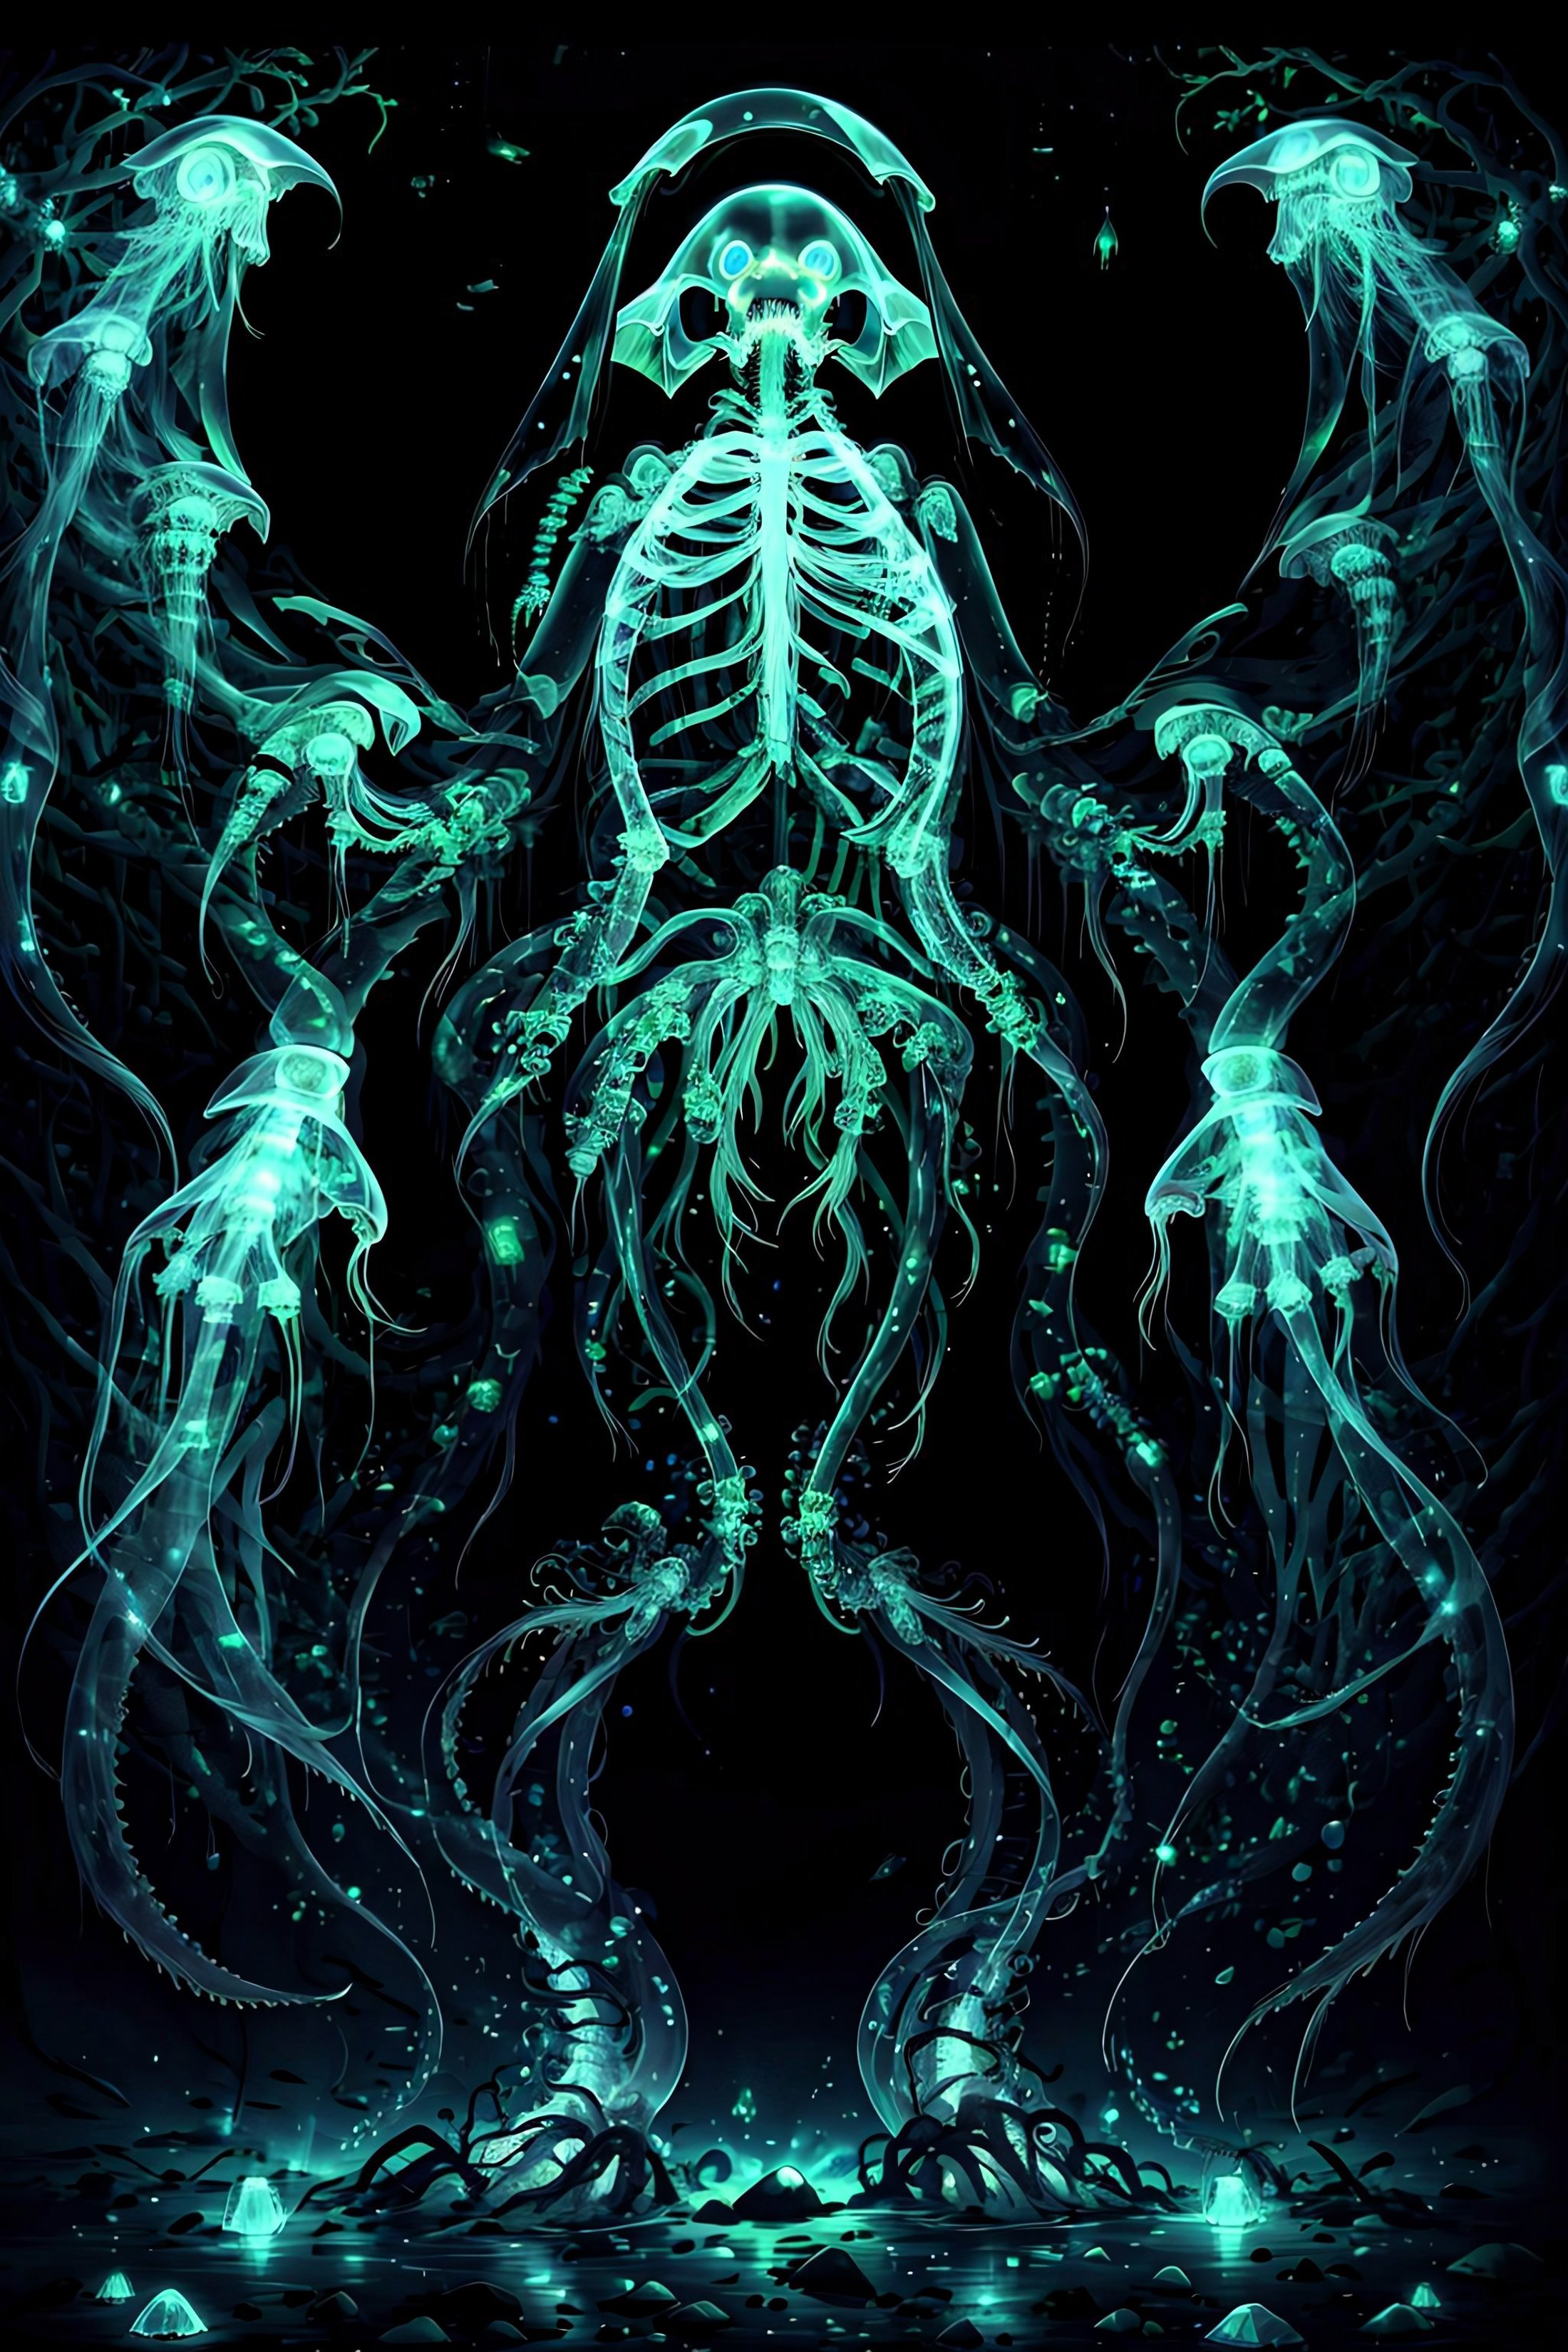 X-Ray Art image by ninjatacoshell